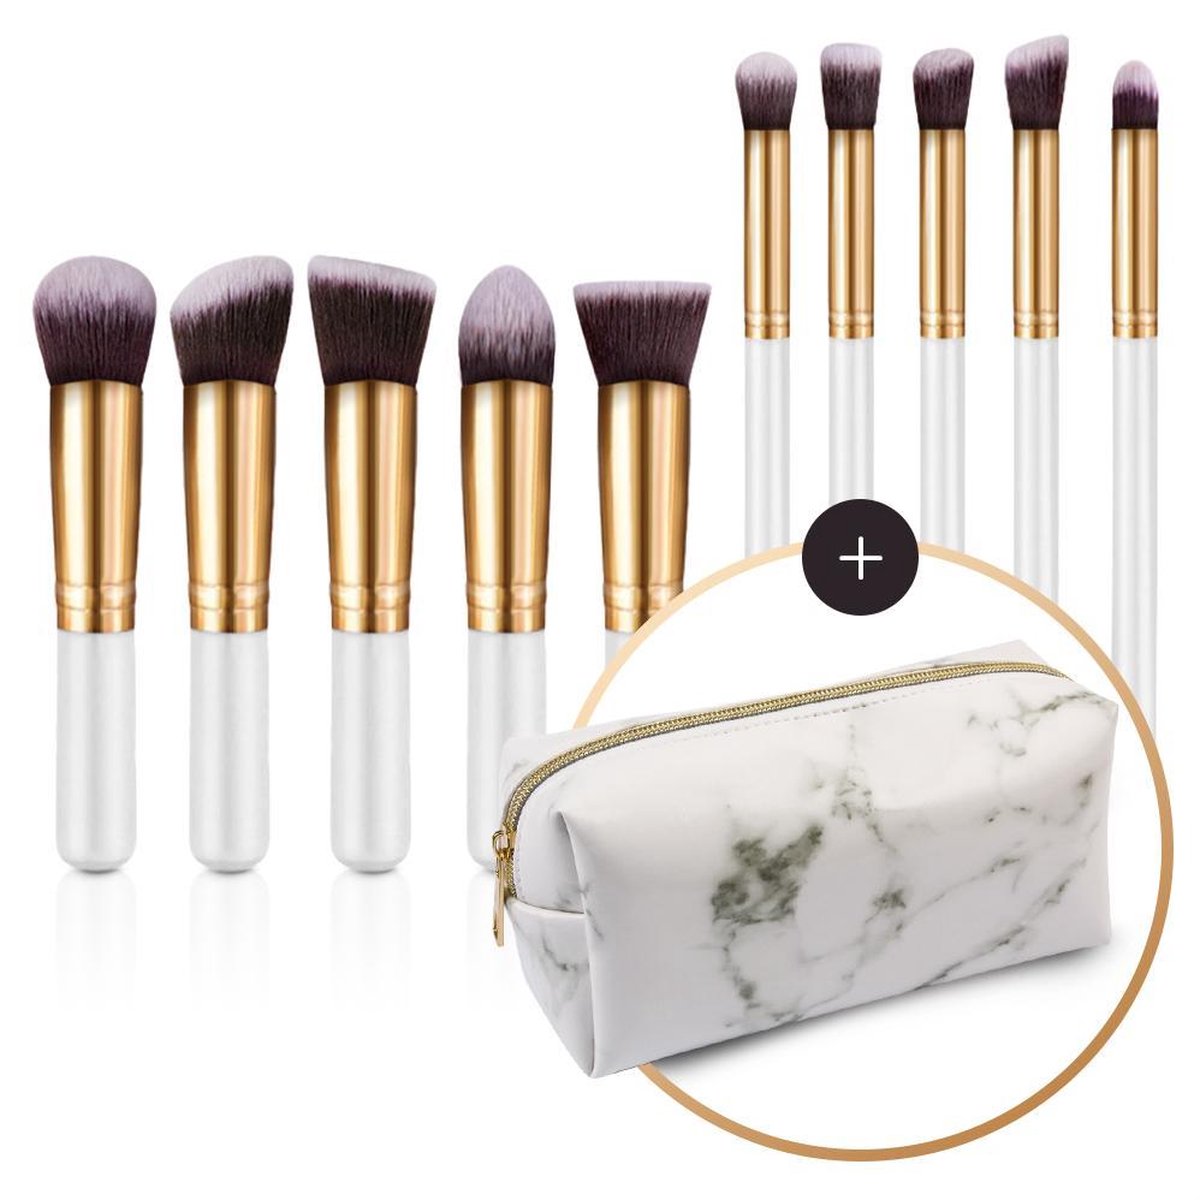 Evvie set van 10 make-up kwasten kabuki in marble etui - Wit-Goud